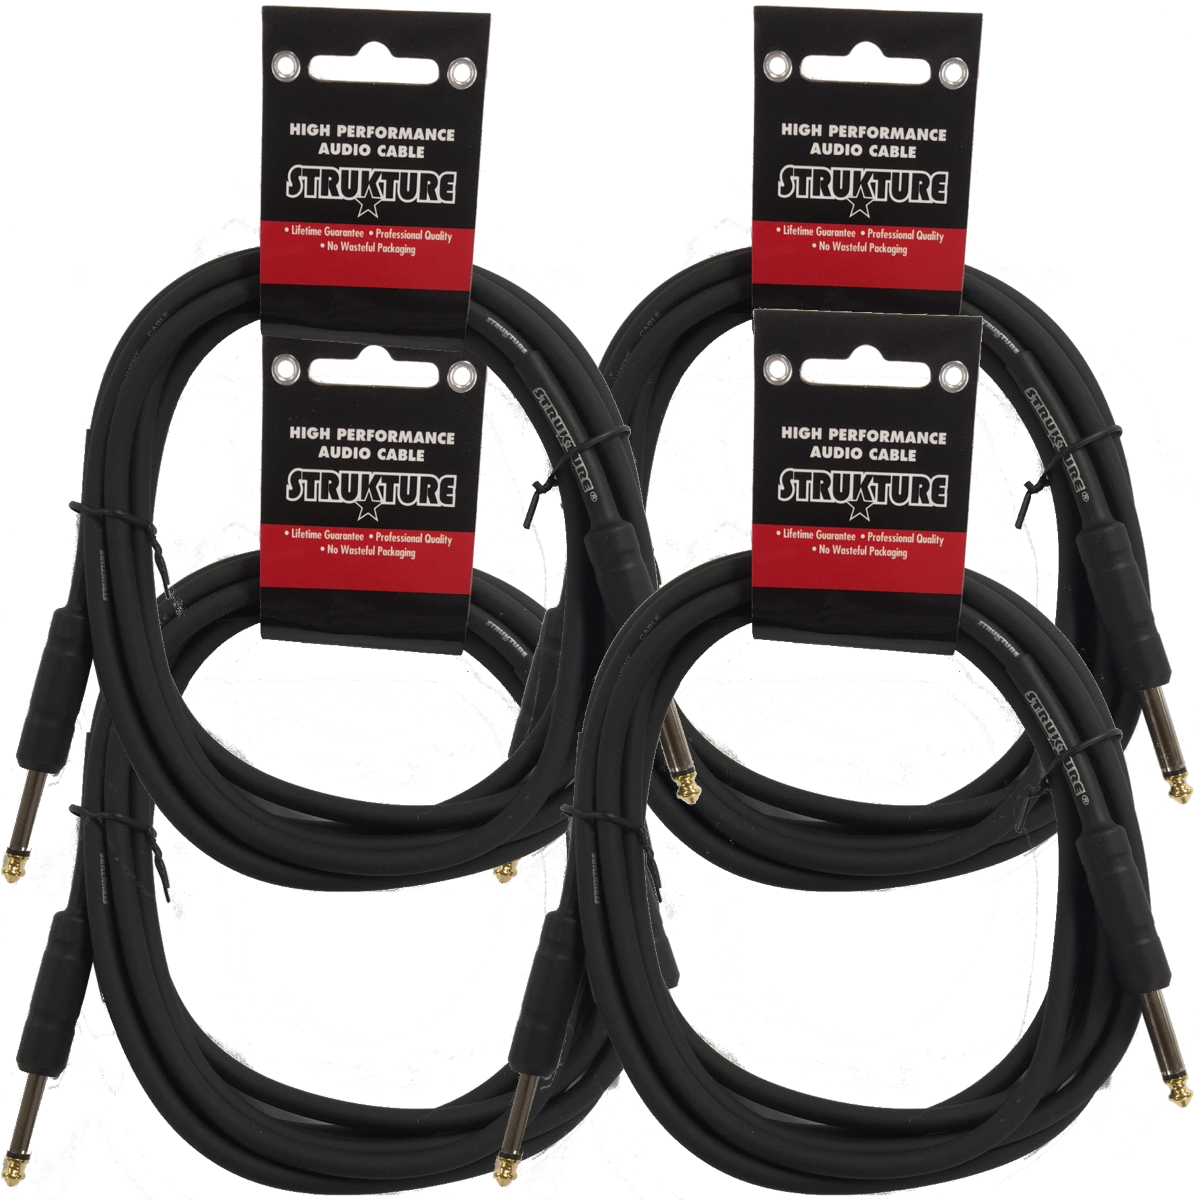 4 PACK Black Strukture 10ft Instrument Cable 6MM Rubber SC10R Lifetime Warranty!